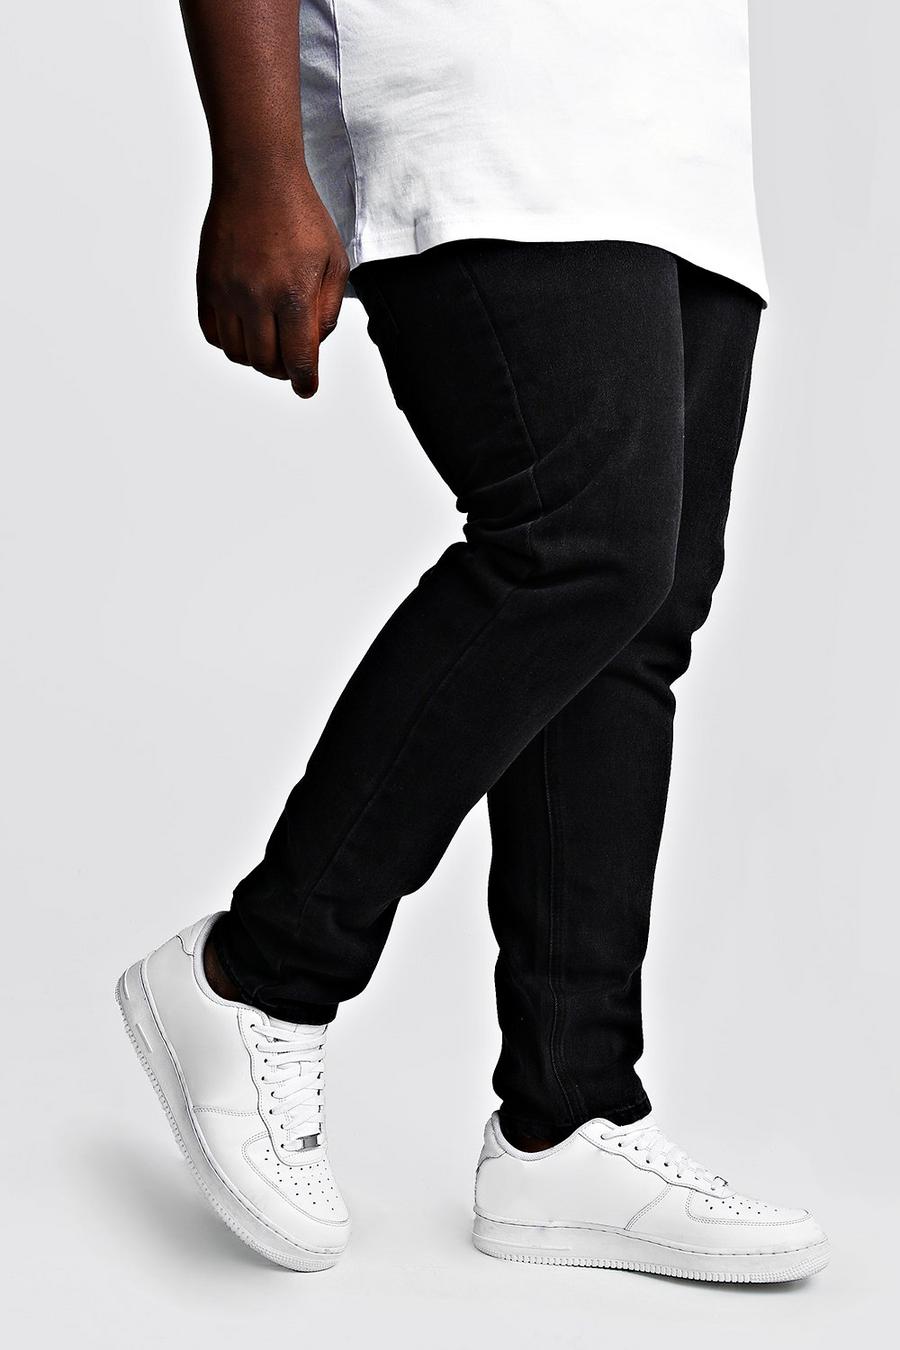 Jeans Plus Size Slim Fit in denim rigido, Nero effetto lavato image number 1